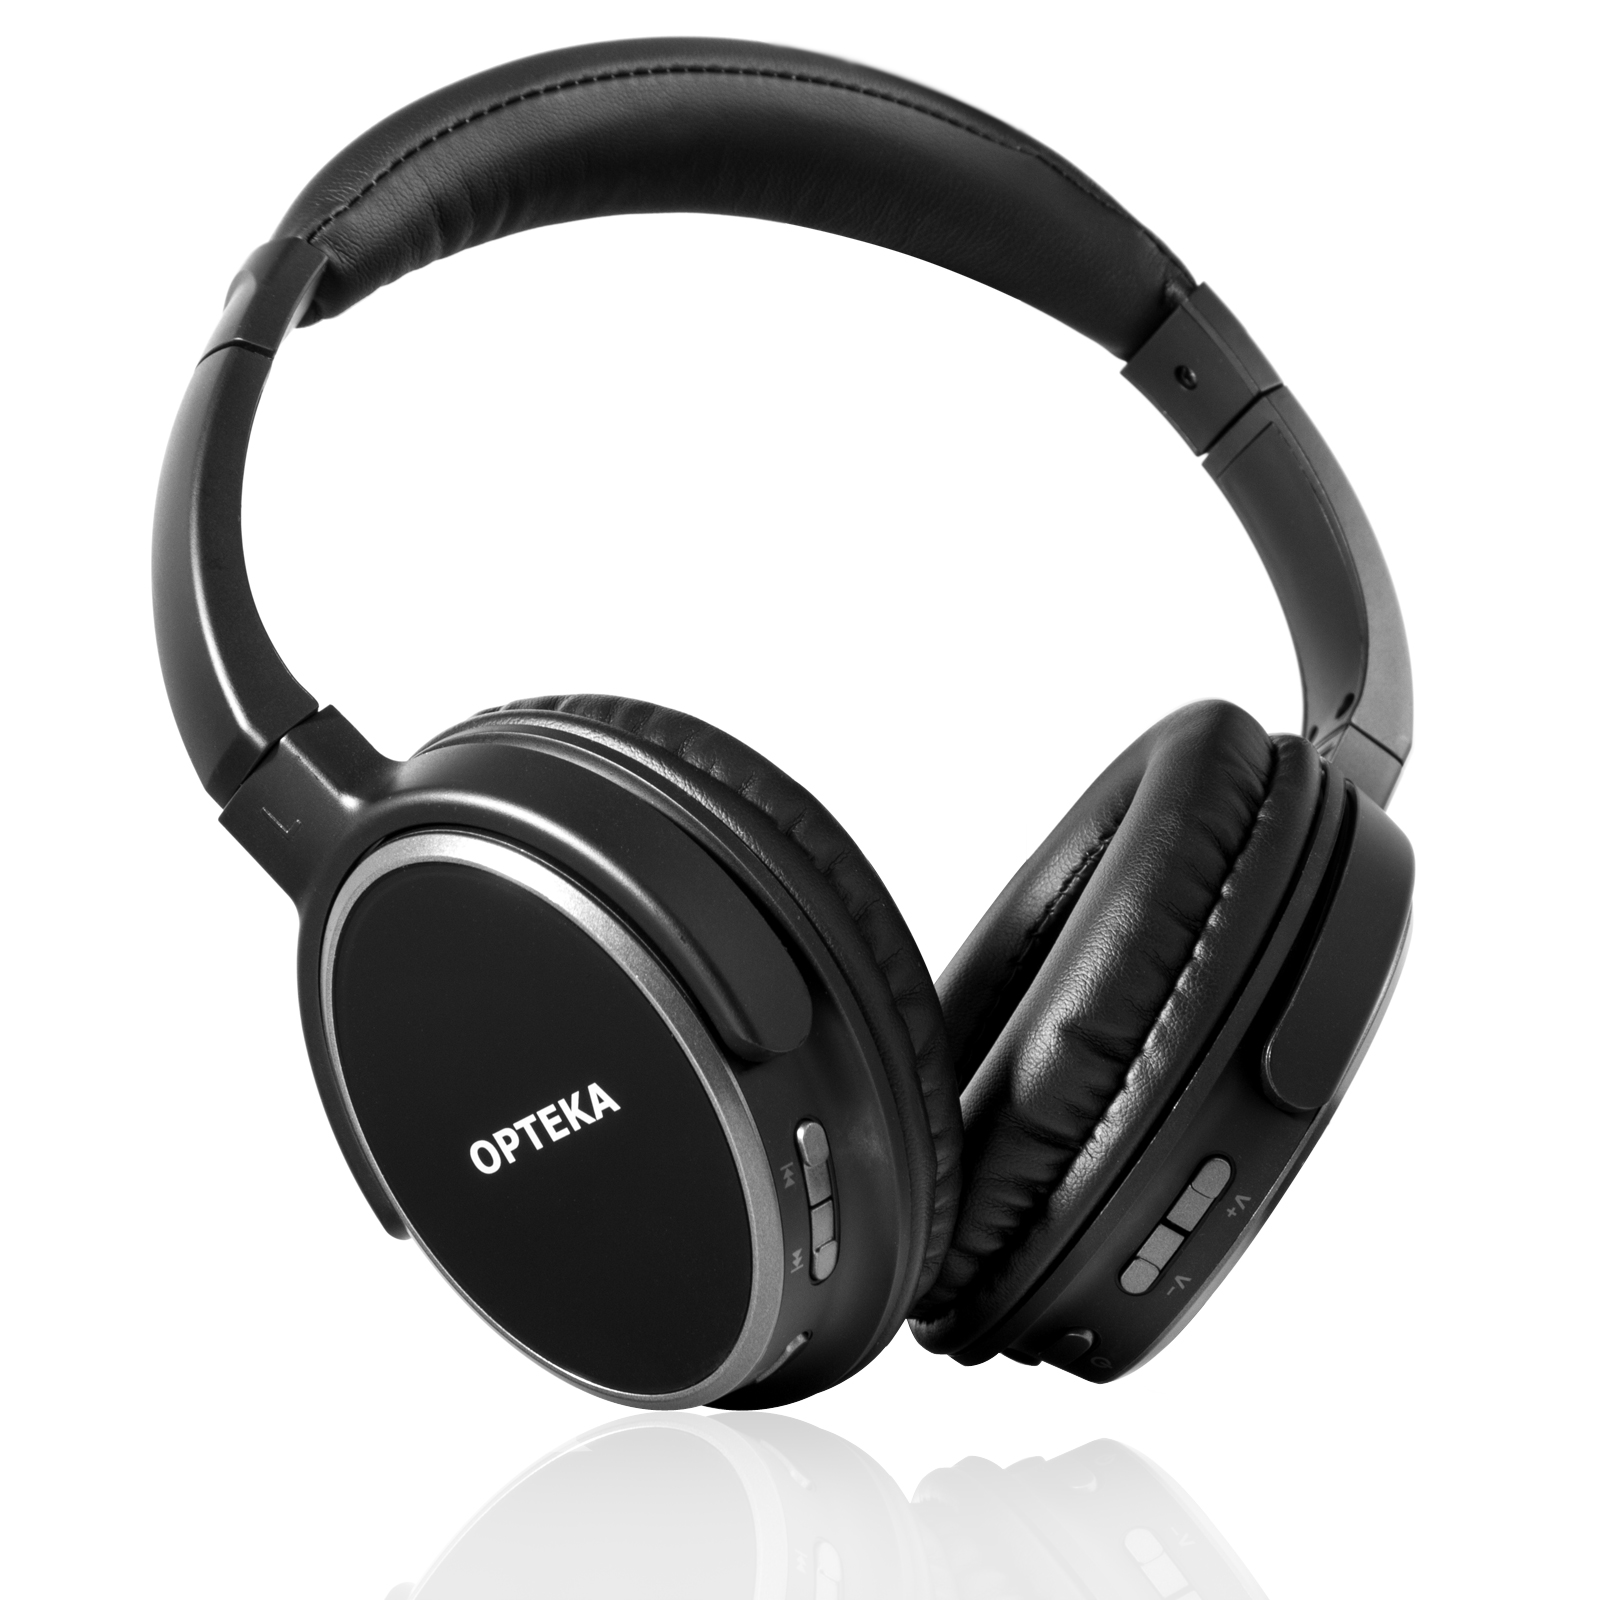 Opteka BTX-5 Over-The-Ear Wireless Bluetooth 4.0 Stereo Headphones ...